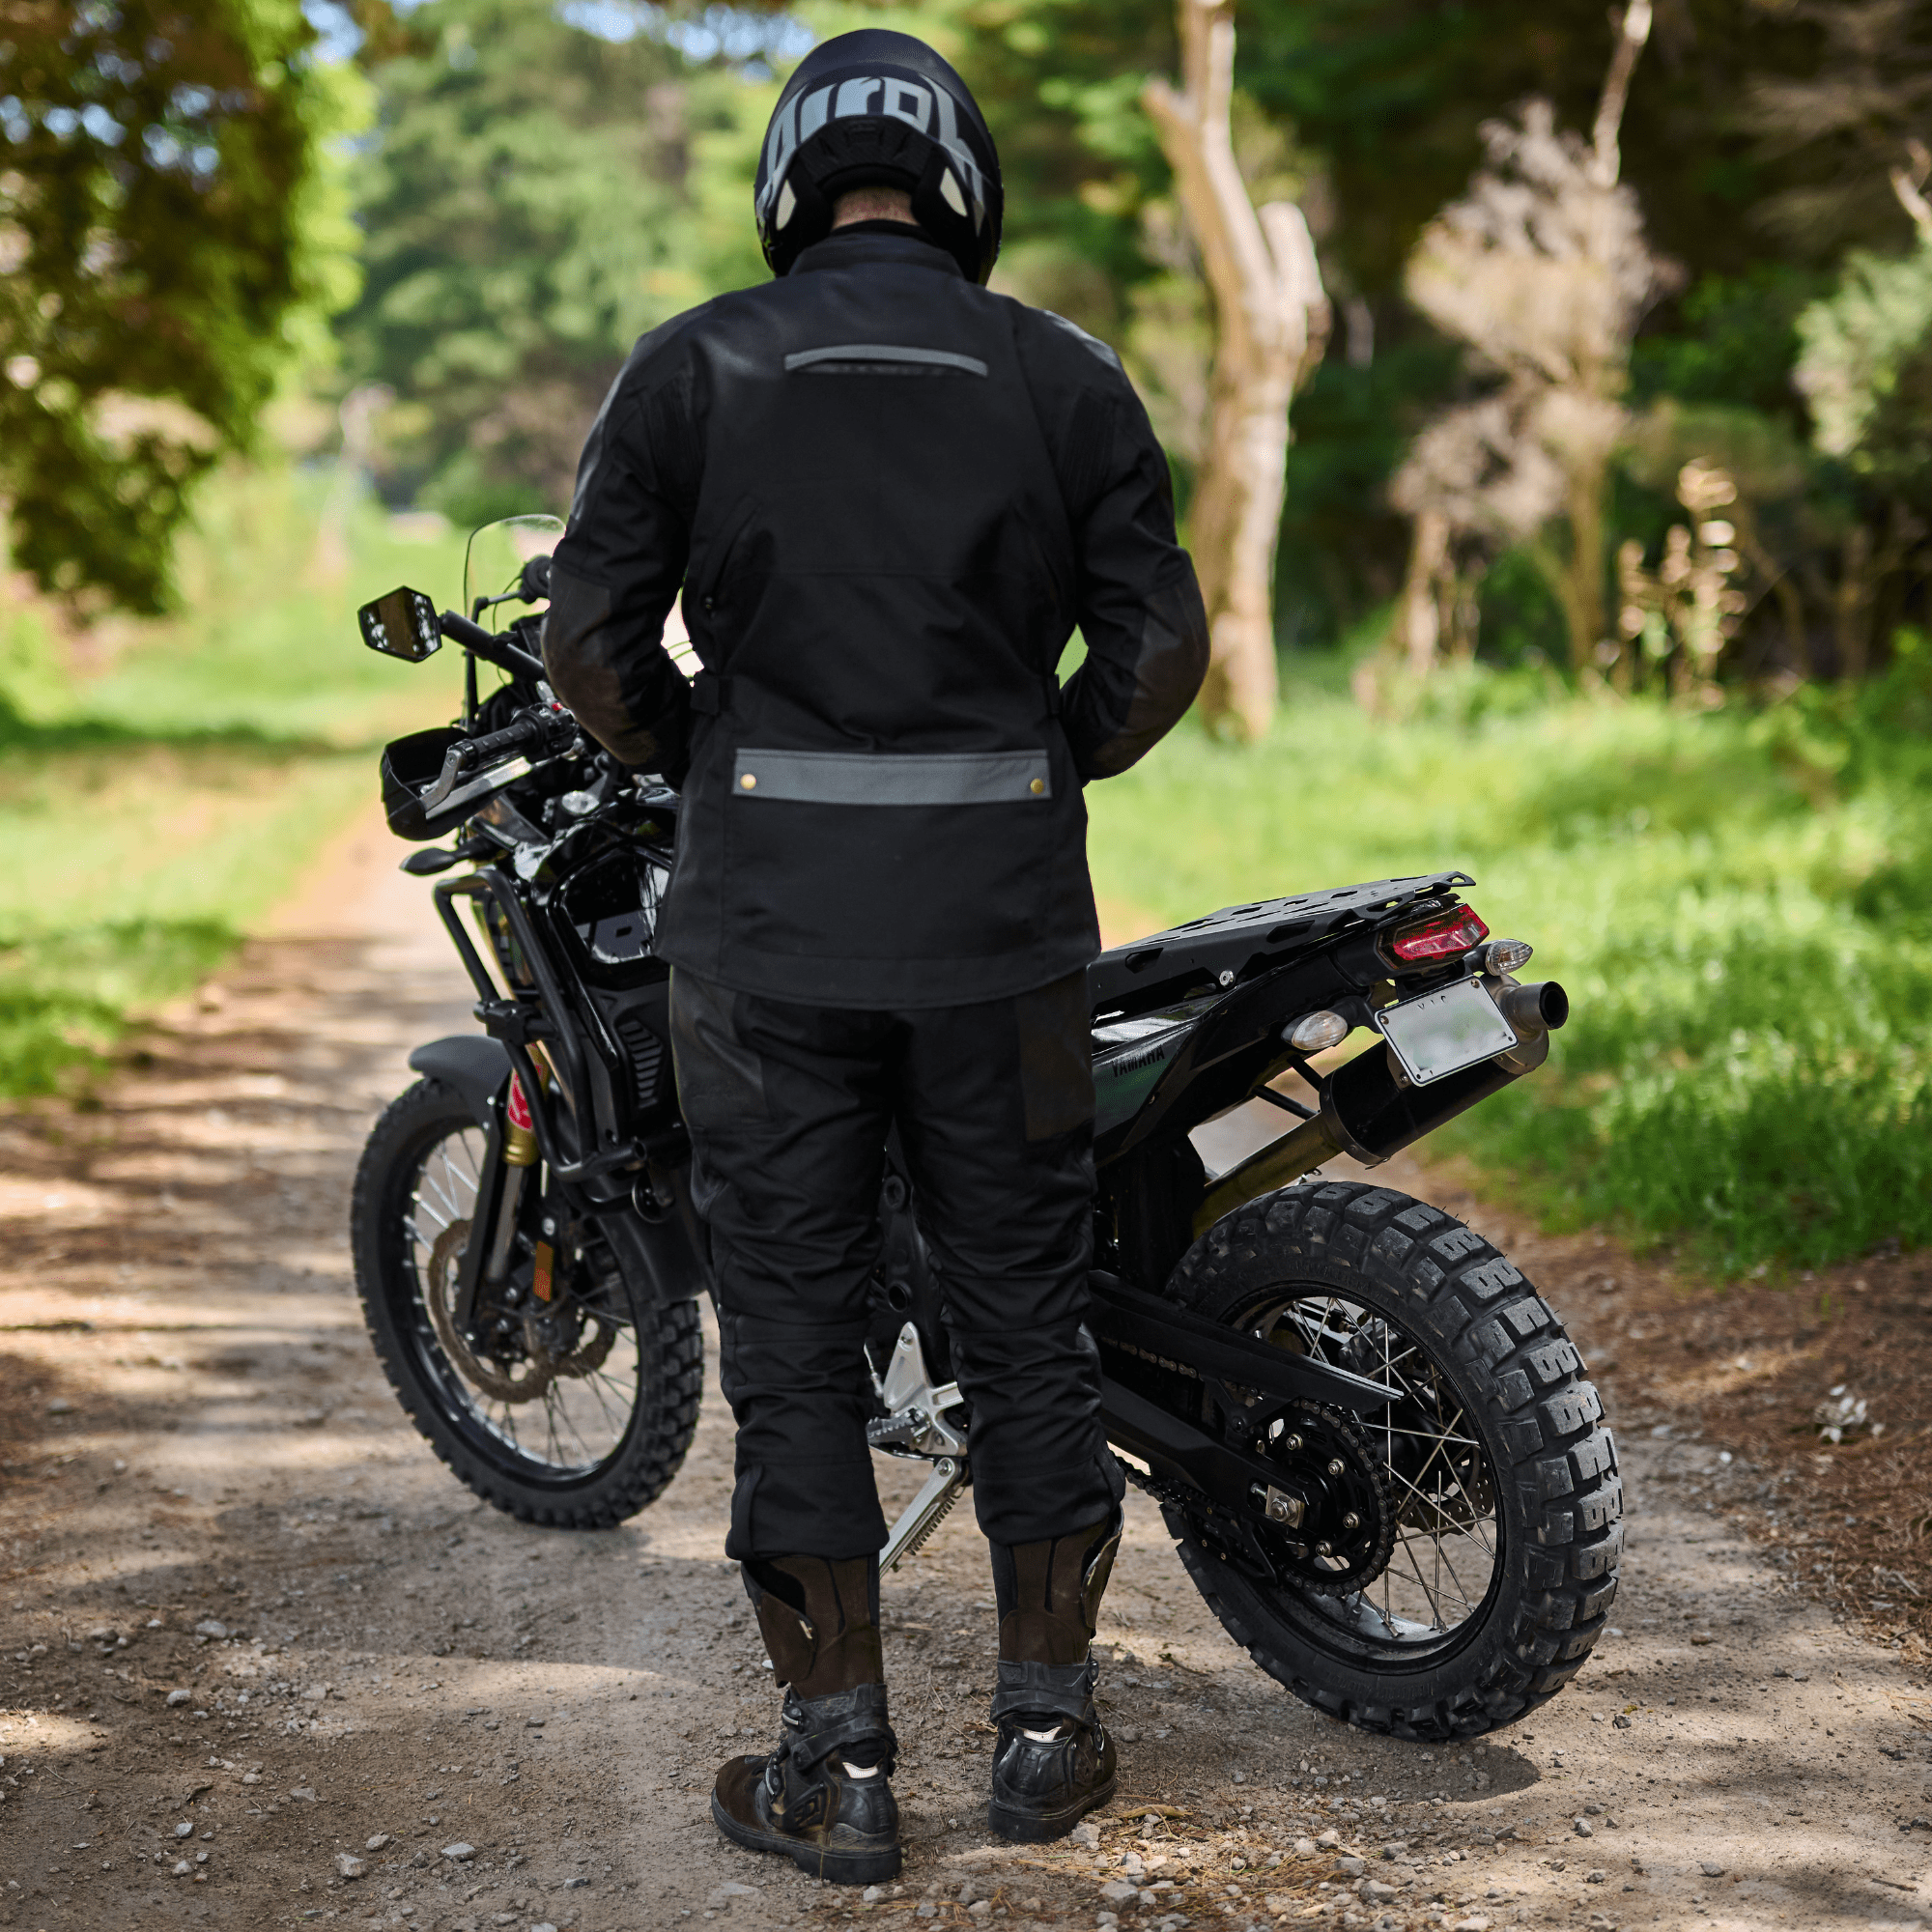 Replica MotoGp 23 - Leather jacket | Motorcycle wear | apparel Ducati